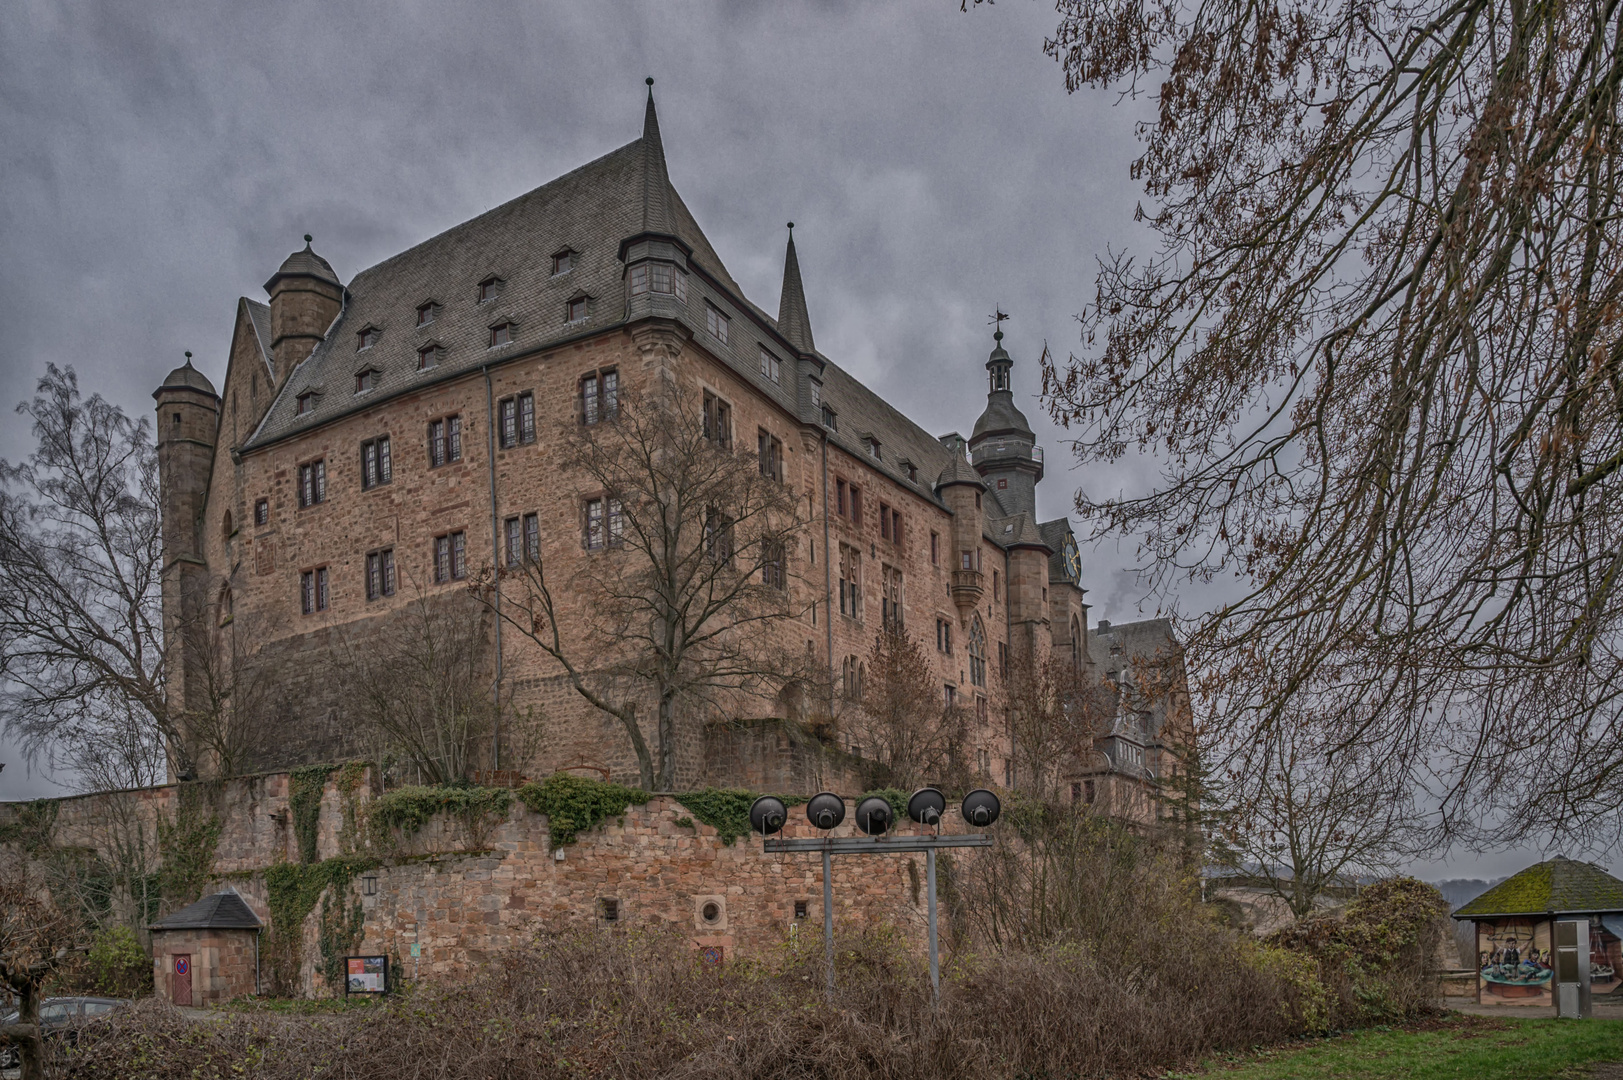 Landgrafenschloss Marburg